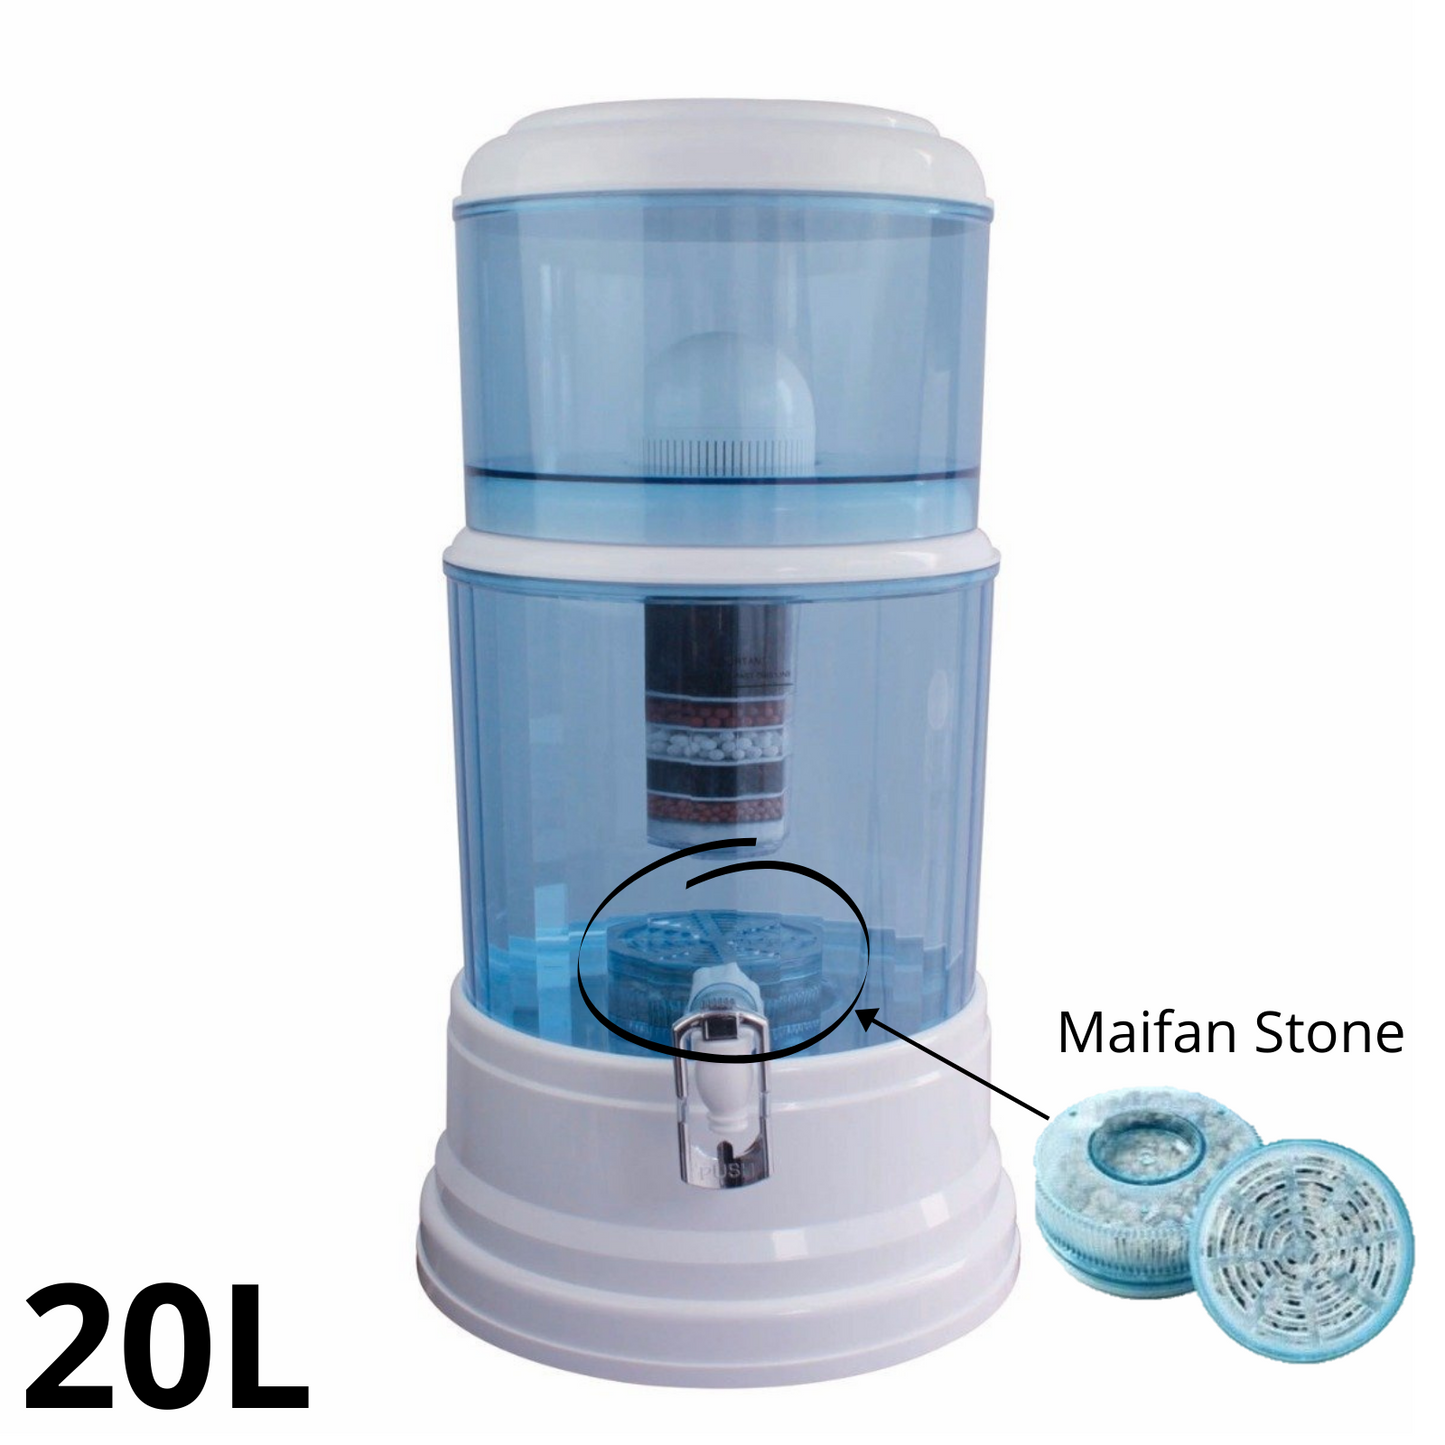 20L Water Dispenser Benchtop Purifier With 1 Fluoride Filter & Maifan Stone